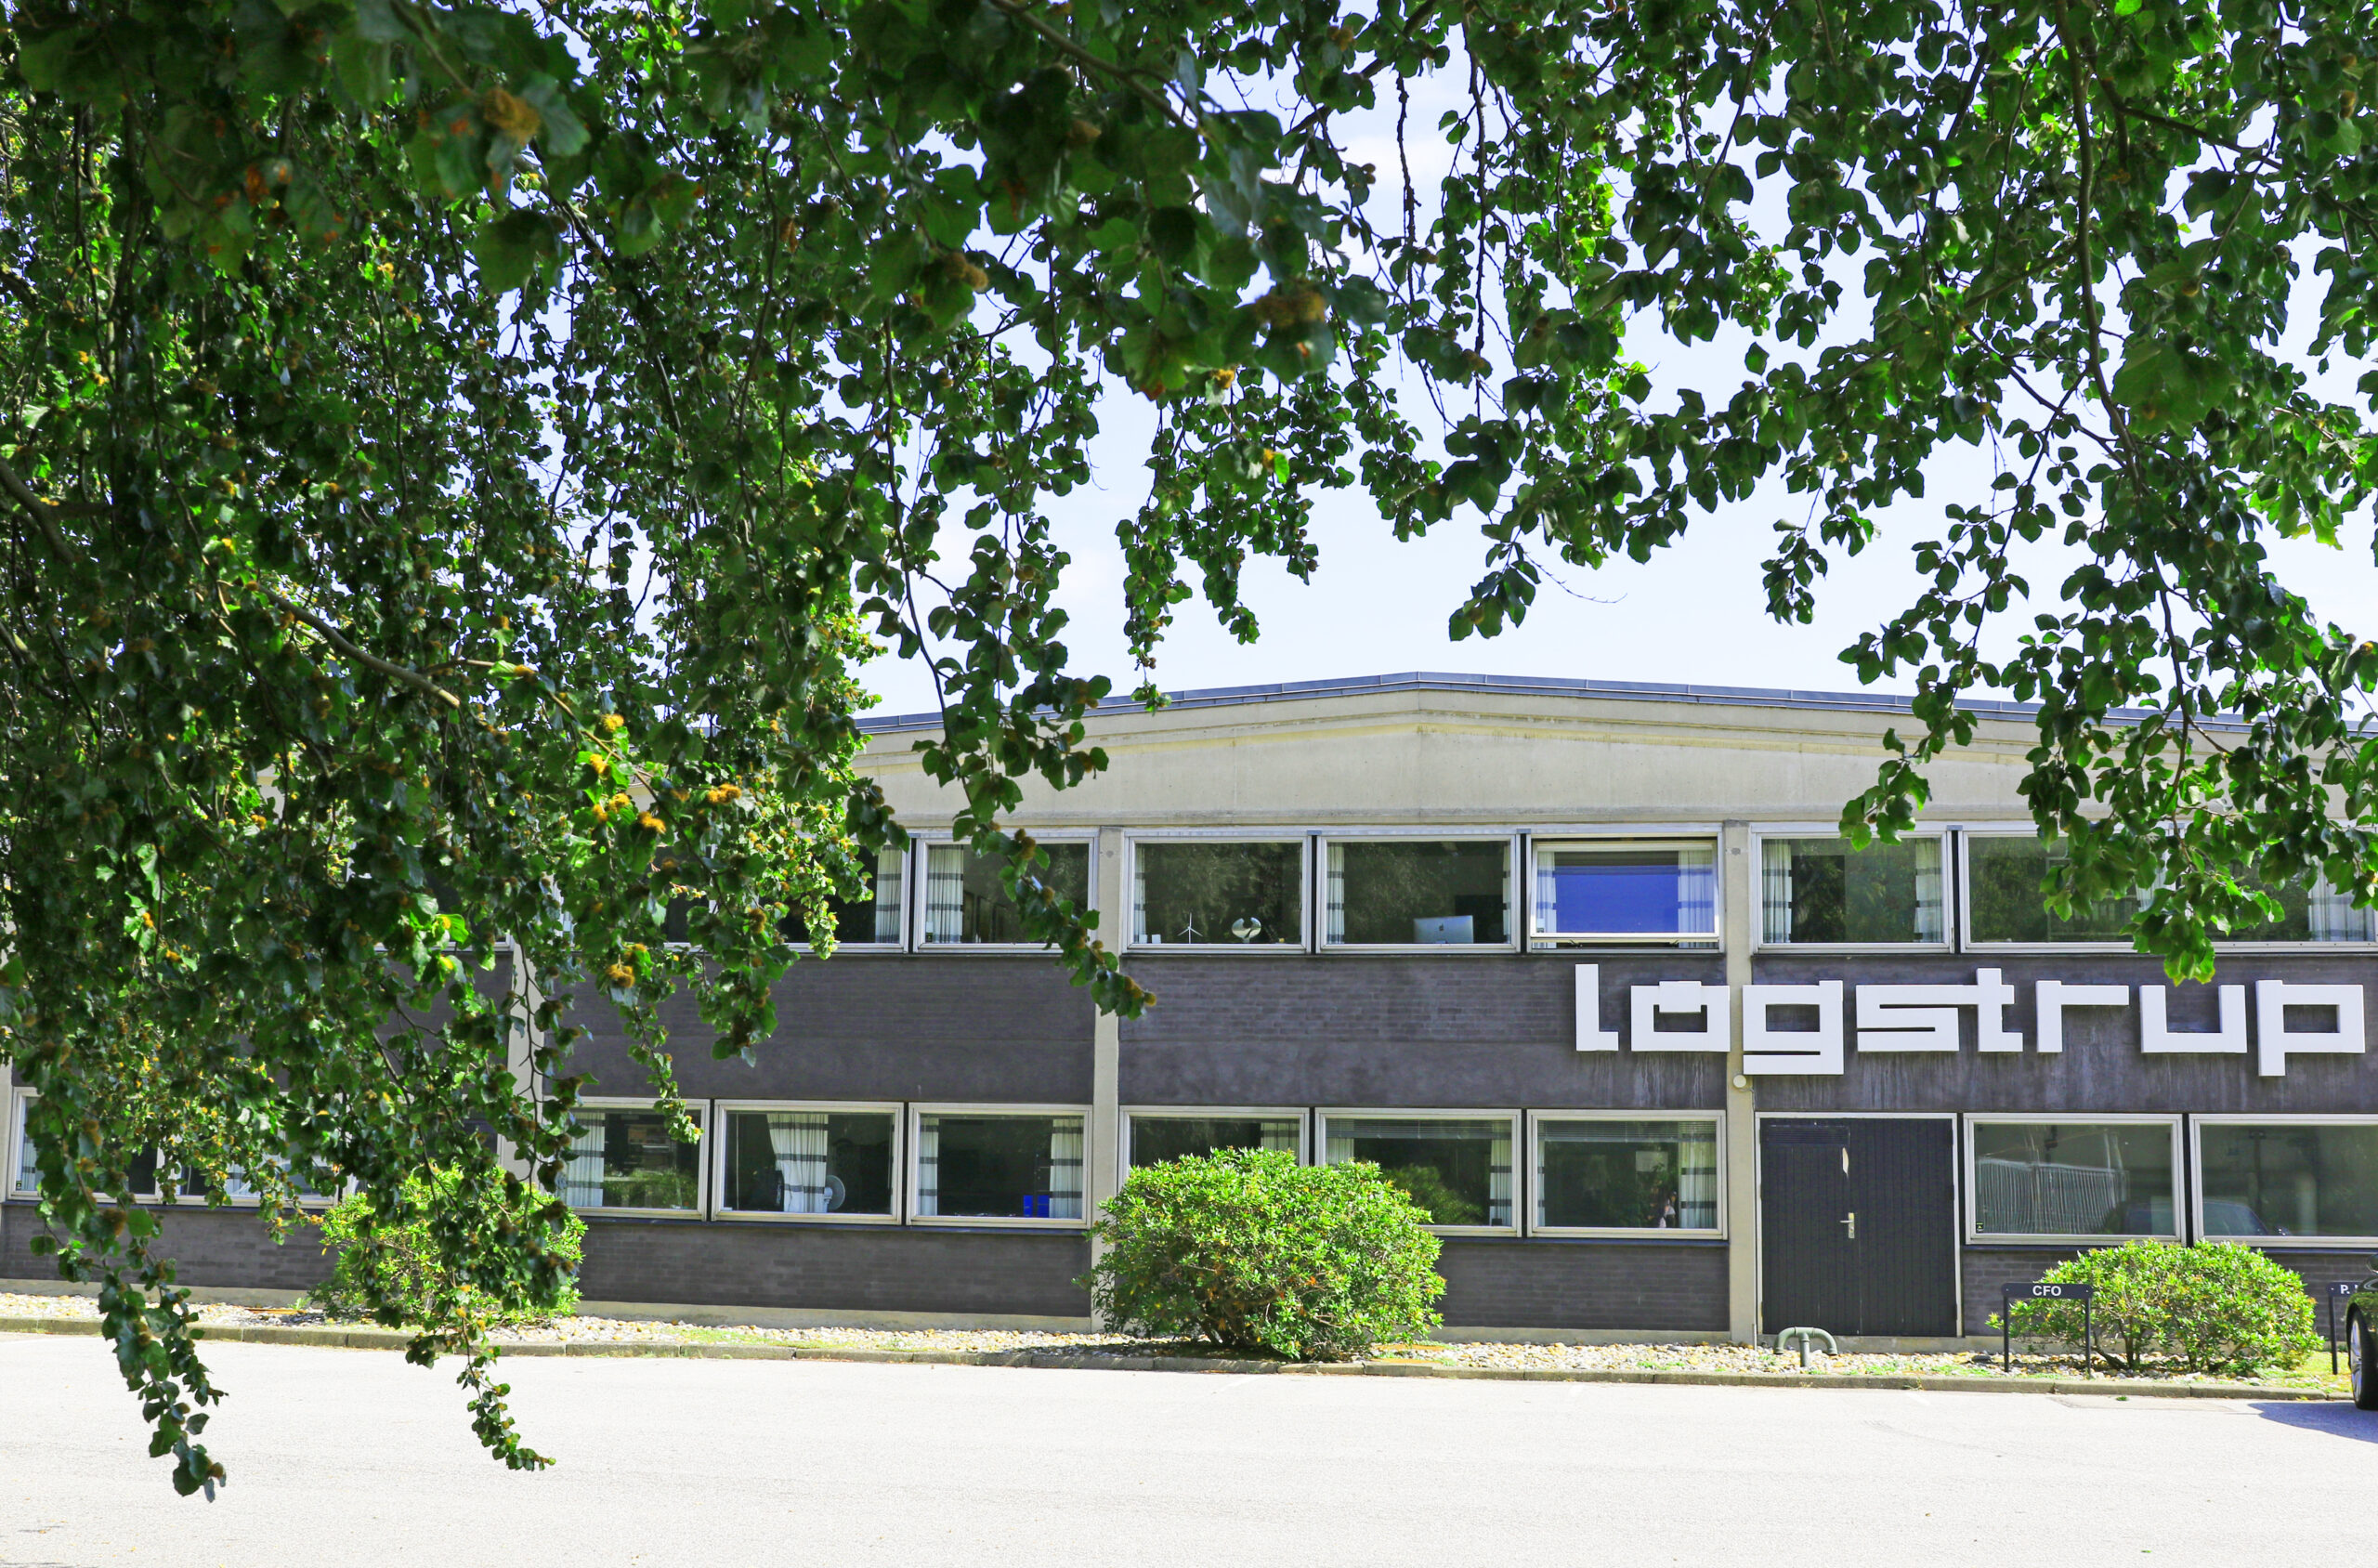 Logstrup Steel's headquarter in Denmark, Kvistgaard